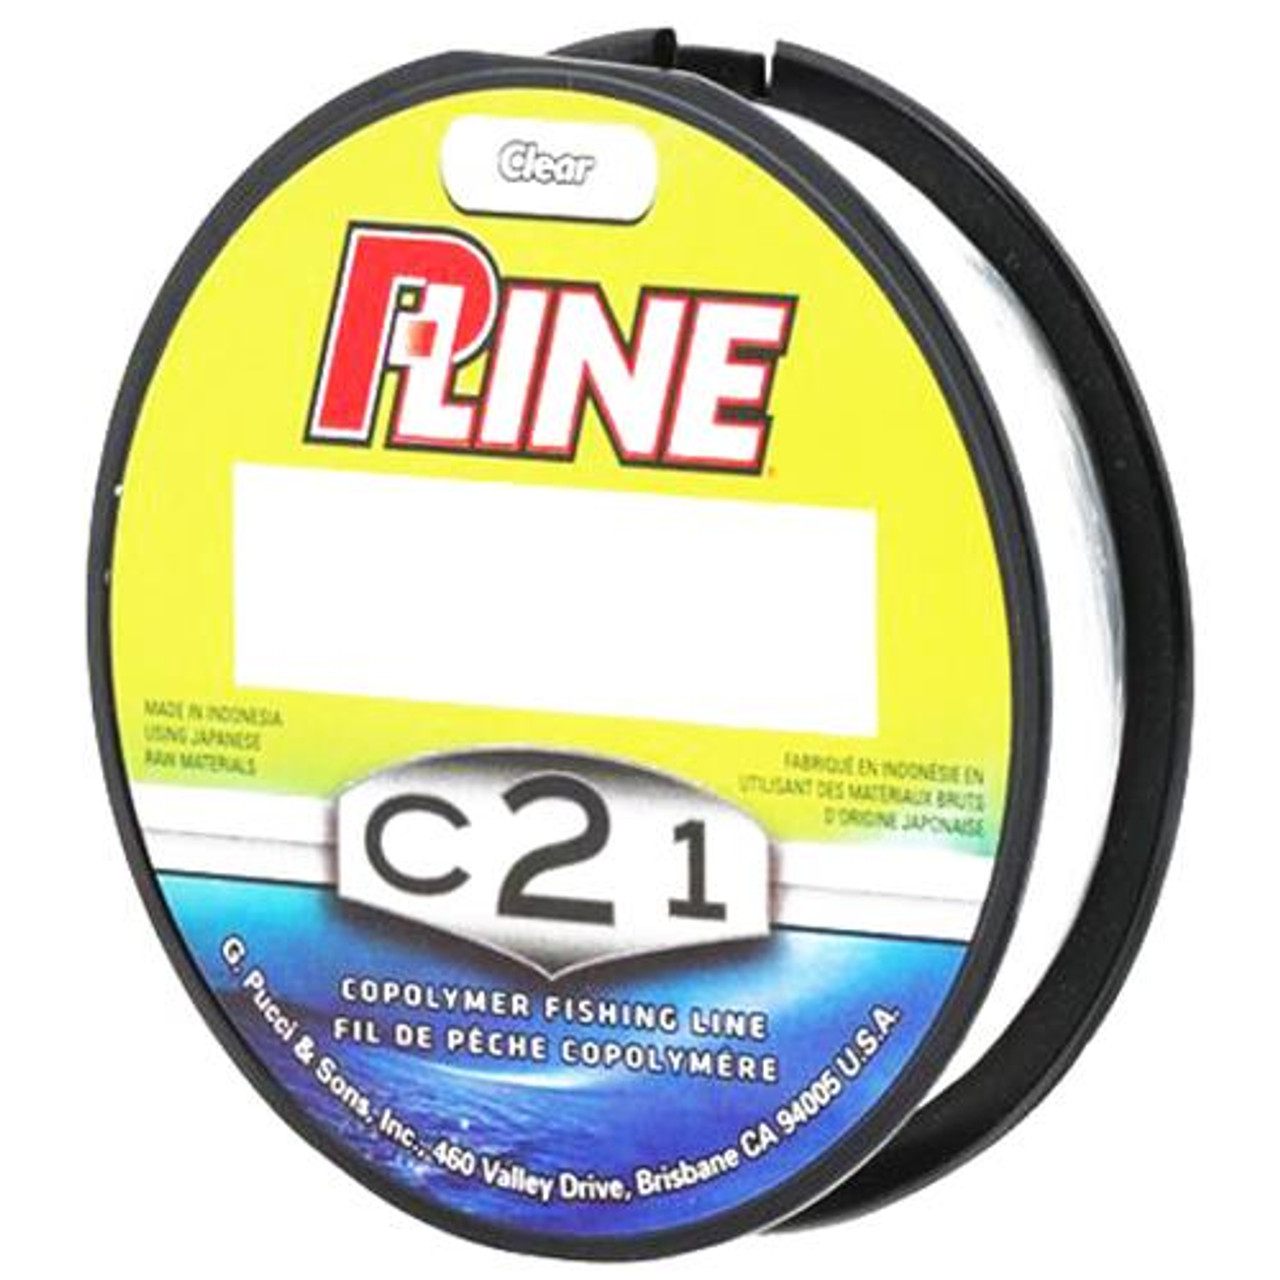 P-Line C21B-6 8500 yd C21 Copolymer Fishing Line, 900 yd 